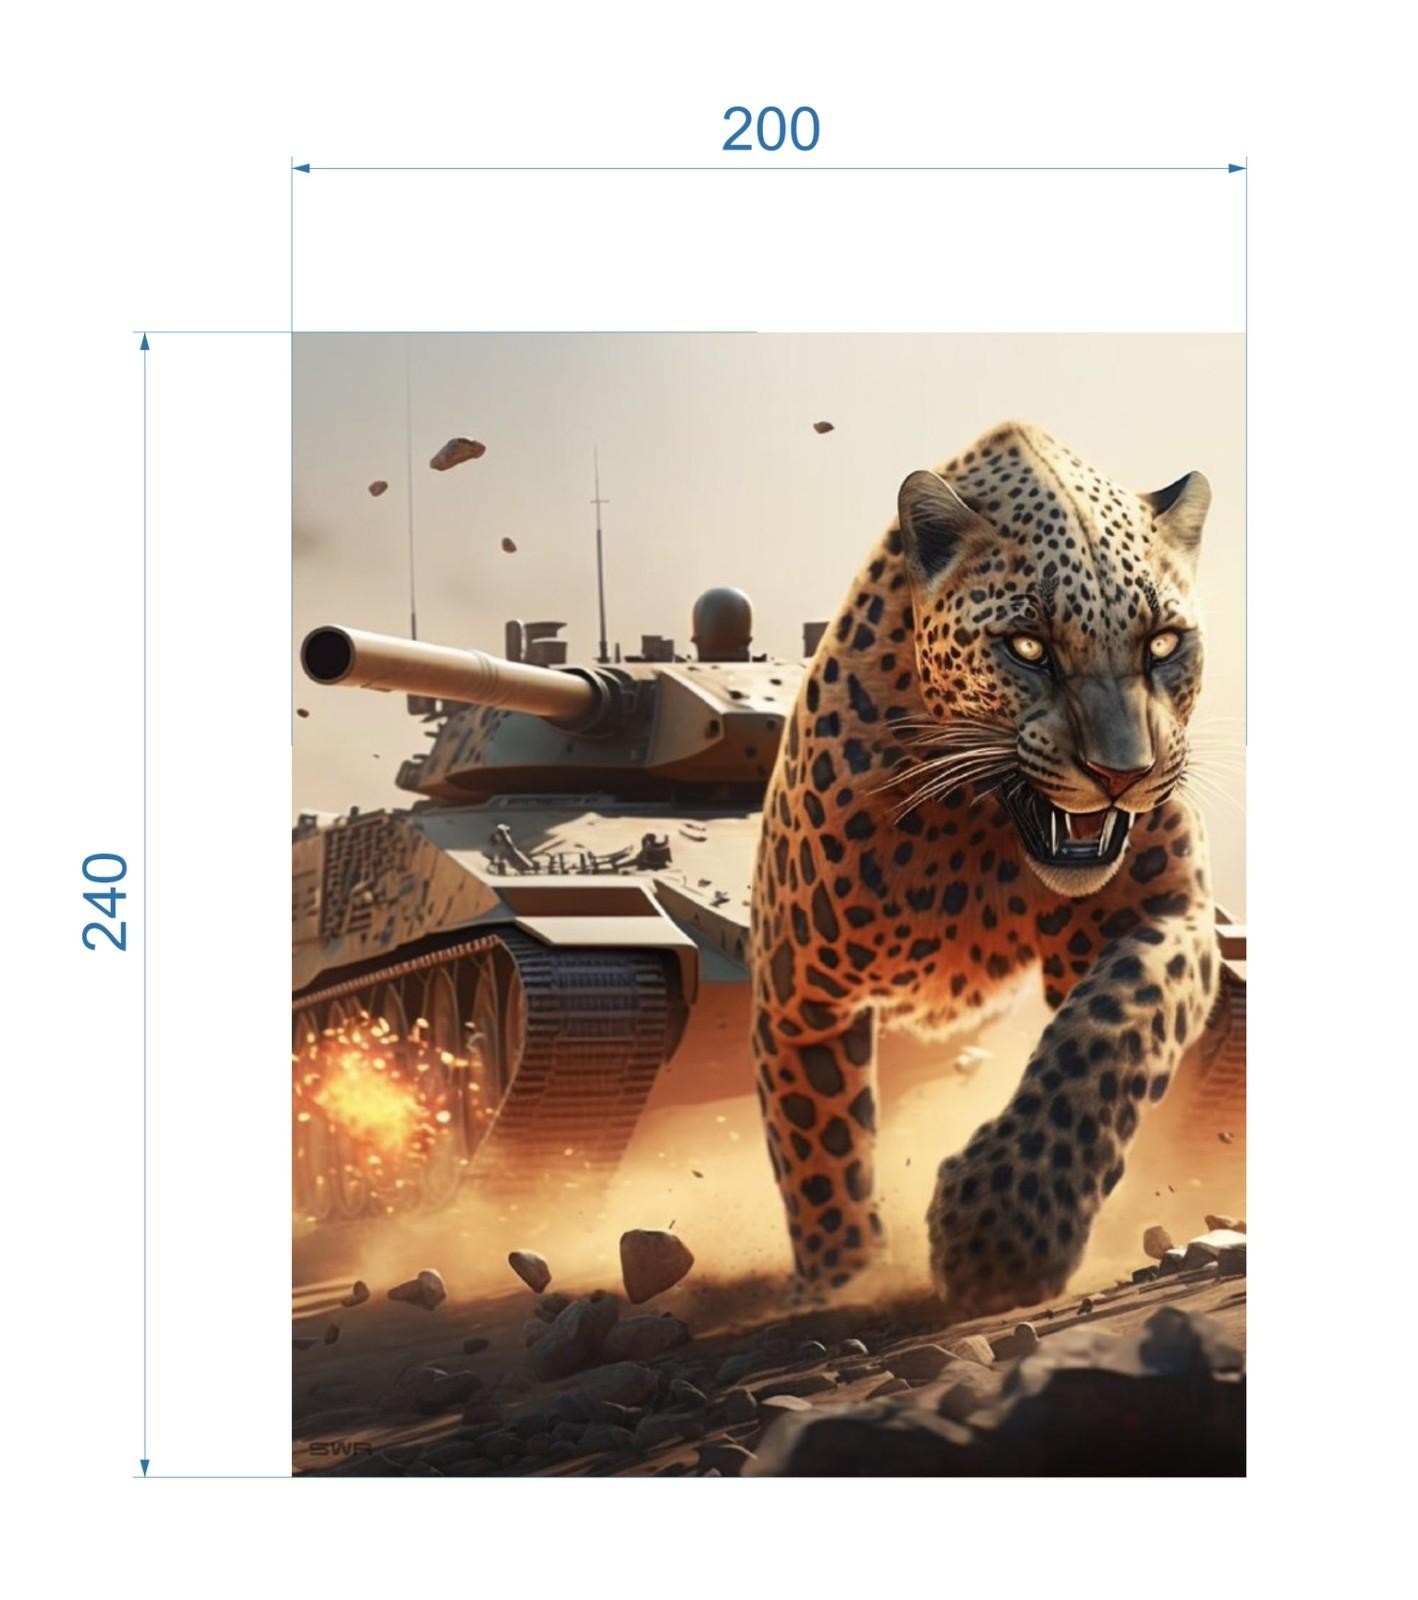 Аппликация приш. Leopard, 20*24cм, полноцвет /дайвинг, сублимация, лазер/, шт. Аппликация пришивная /сублимация/